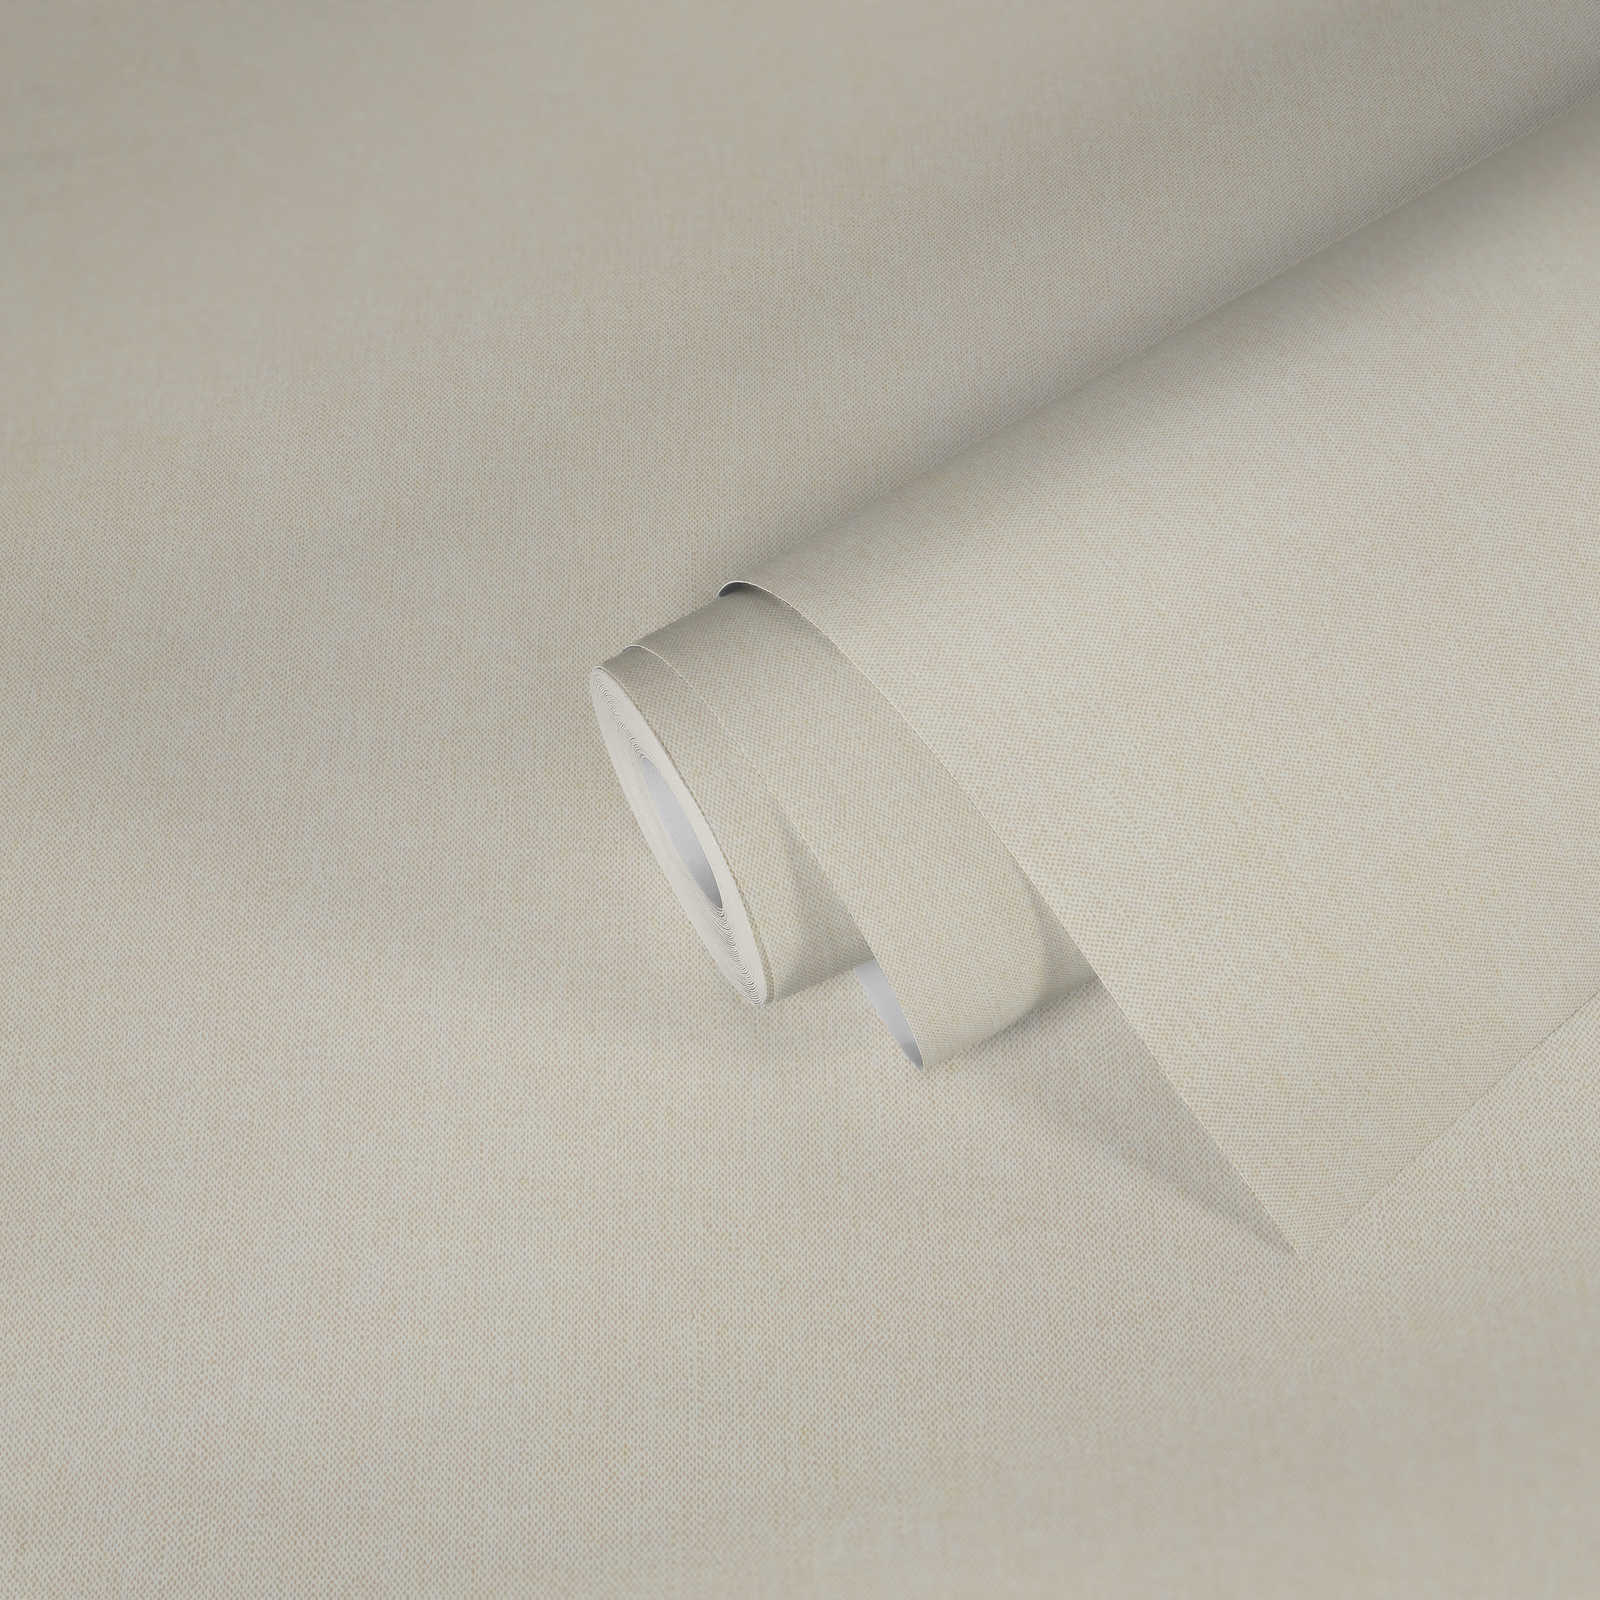             Carta da parati vintage bianca e opaca con struttura tessile - bianco, crema
        